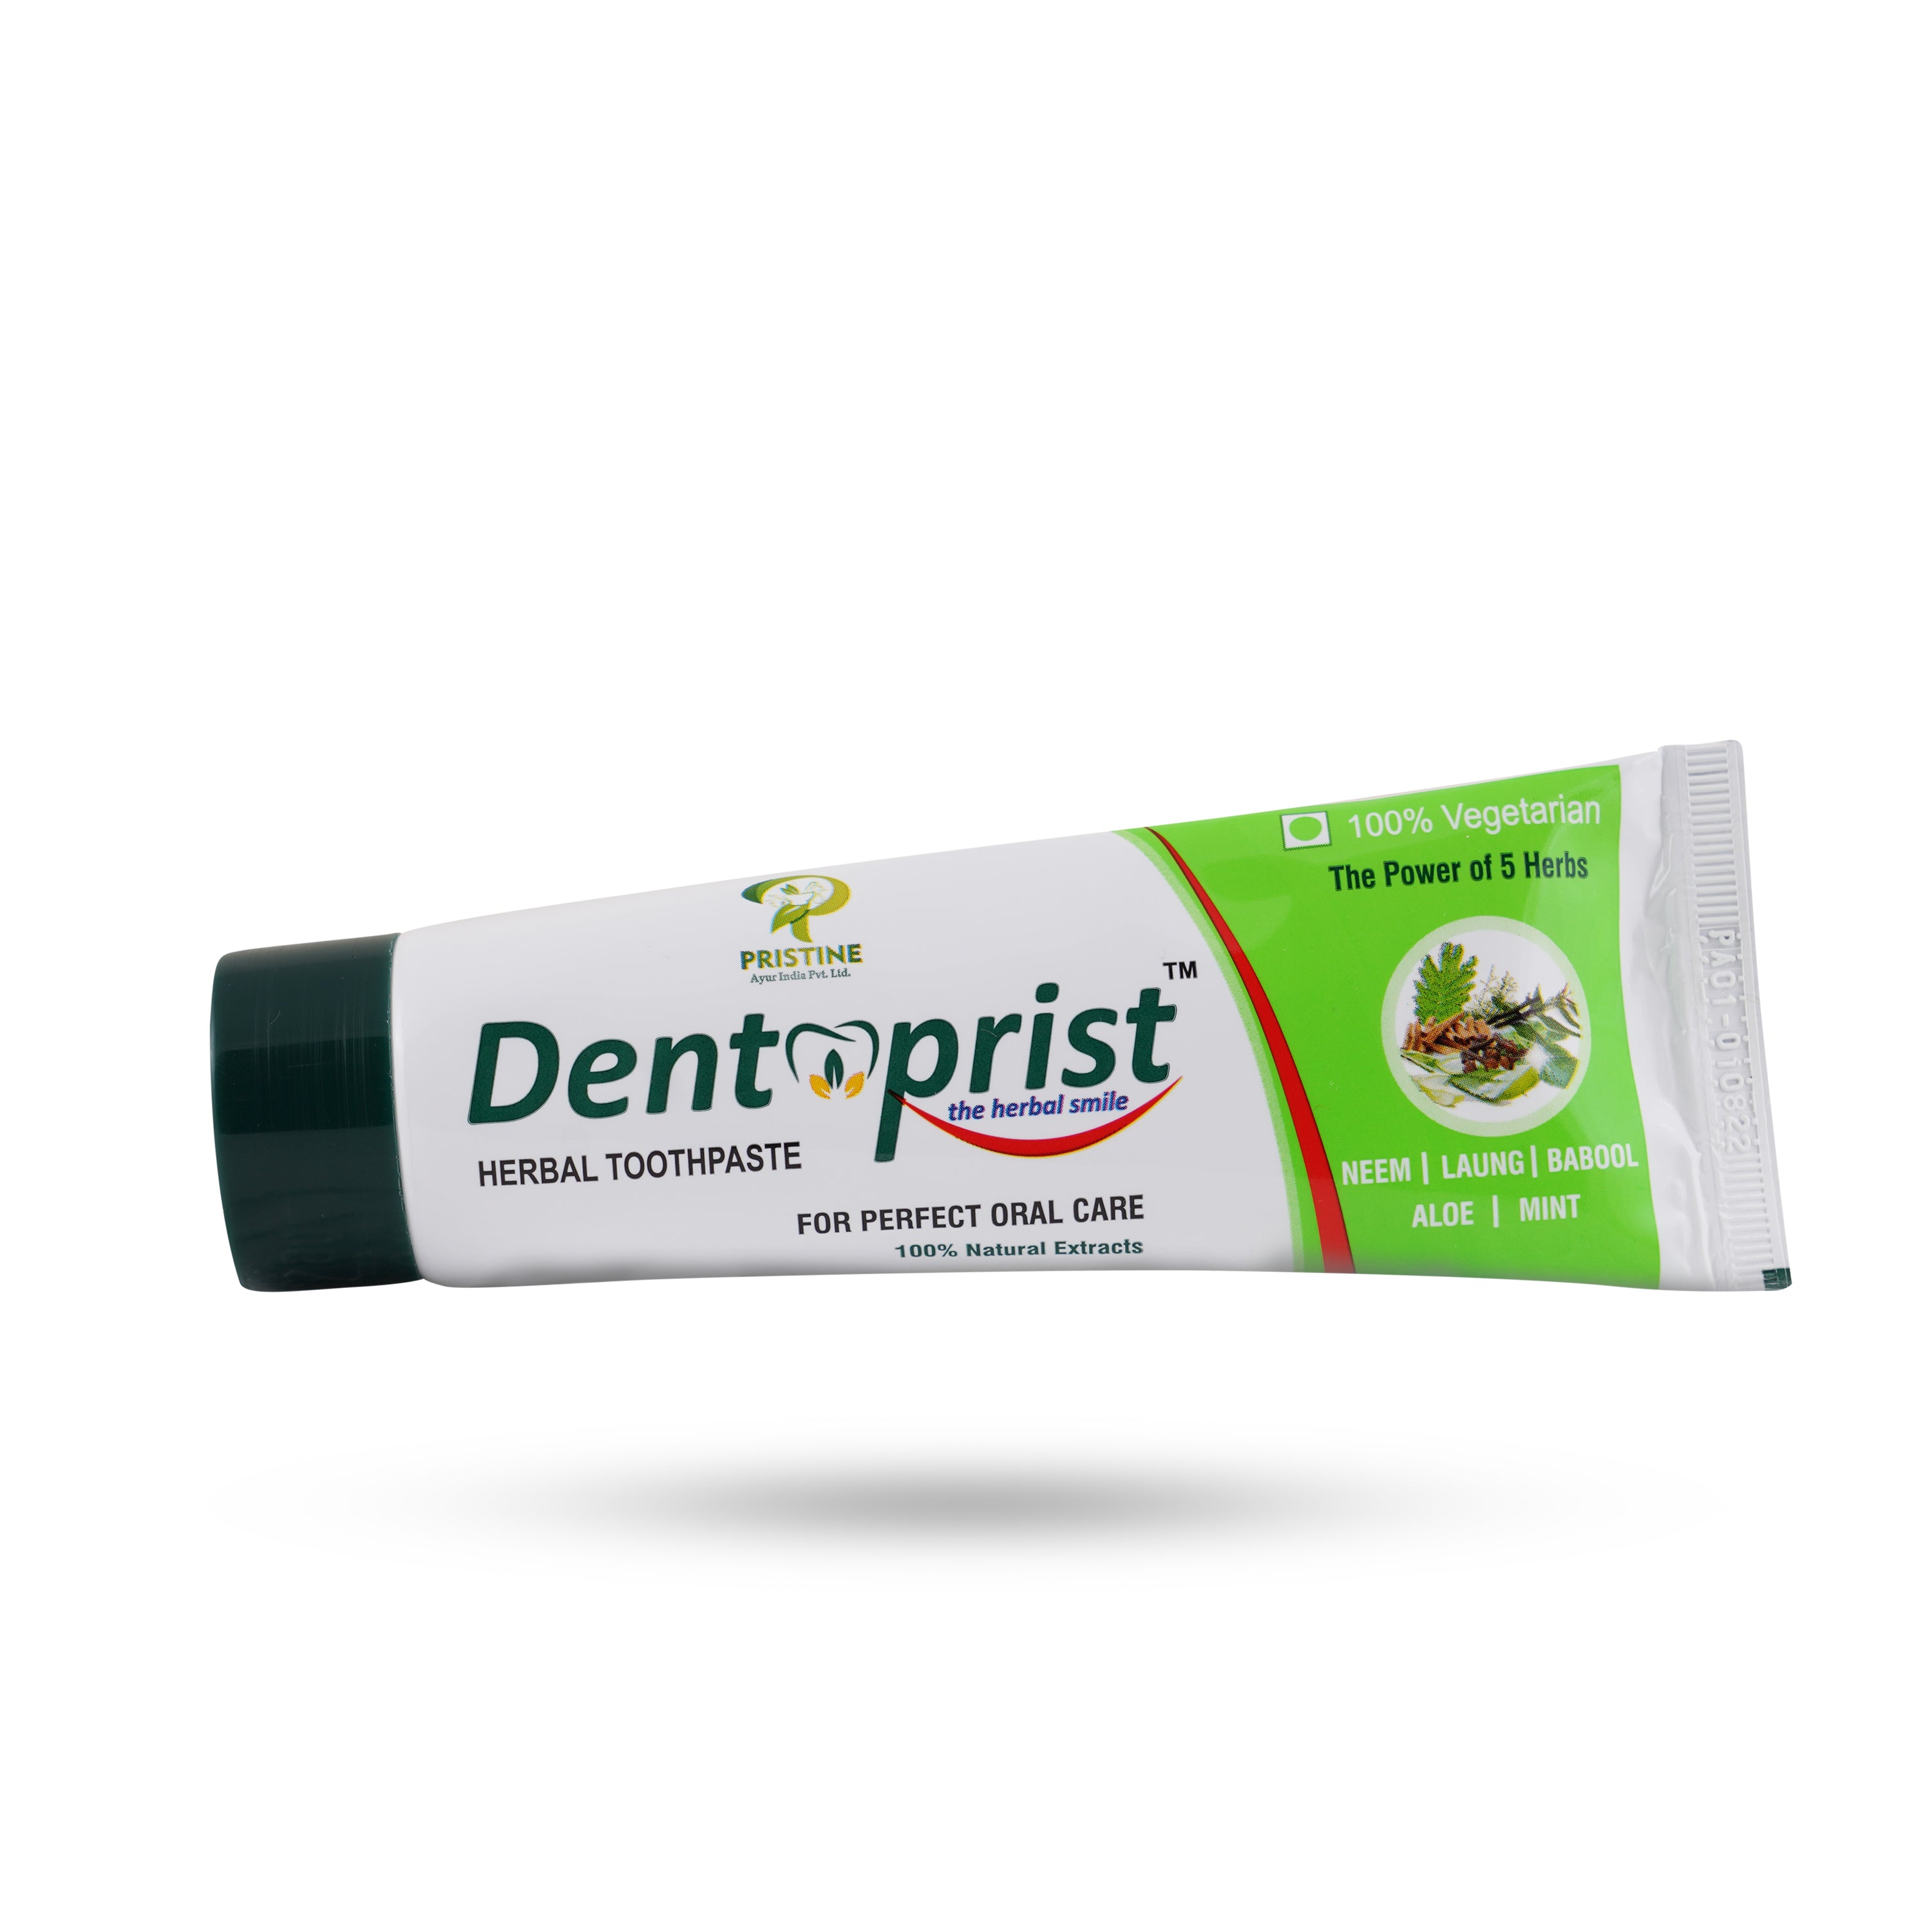 Dentoprist Anti Cavity Toothpaste - साफ सुथरे स्वच्छ, चमकदार व स्वस्थ दाँत